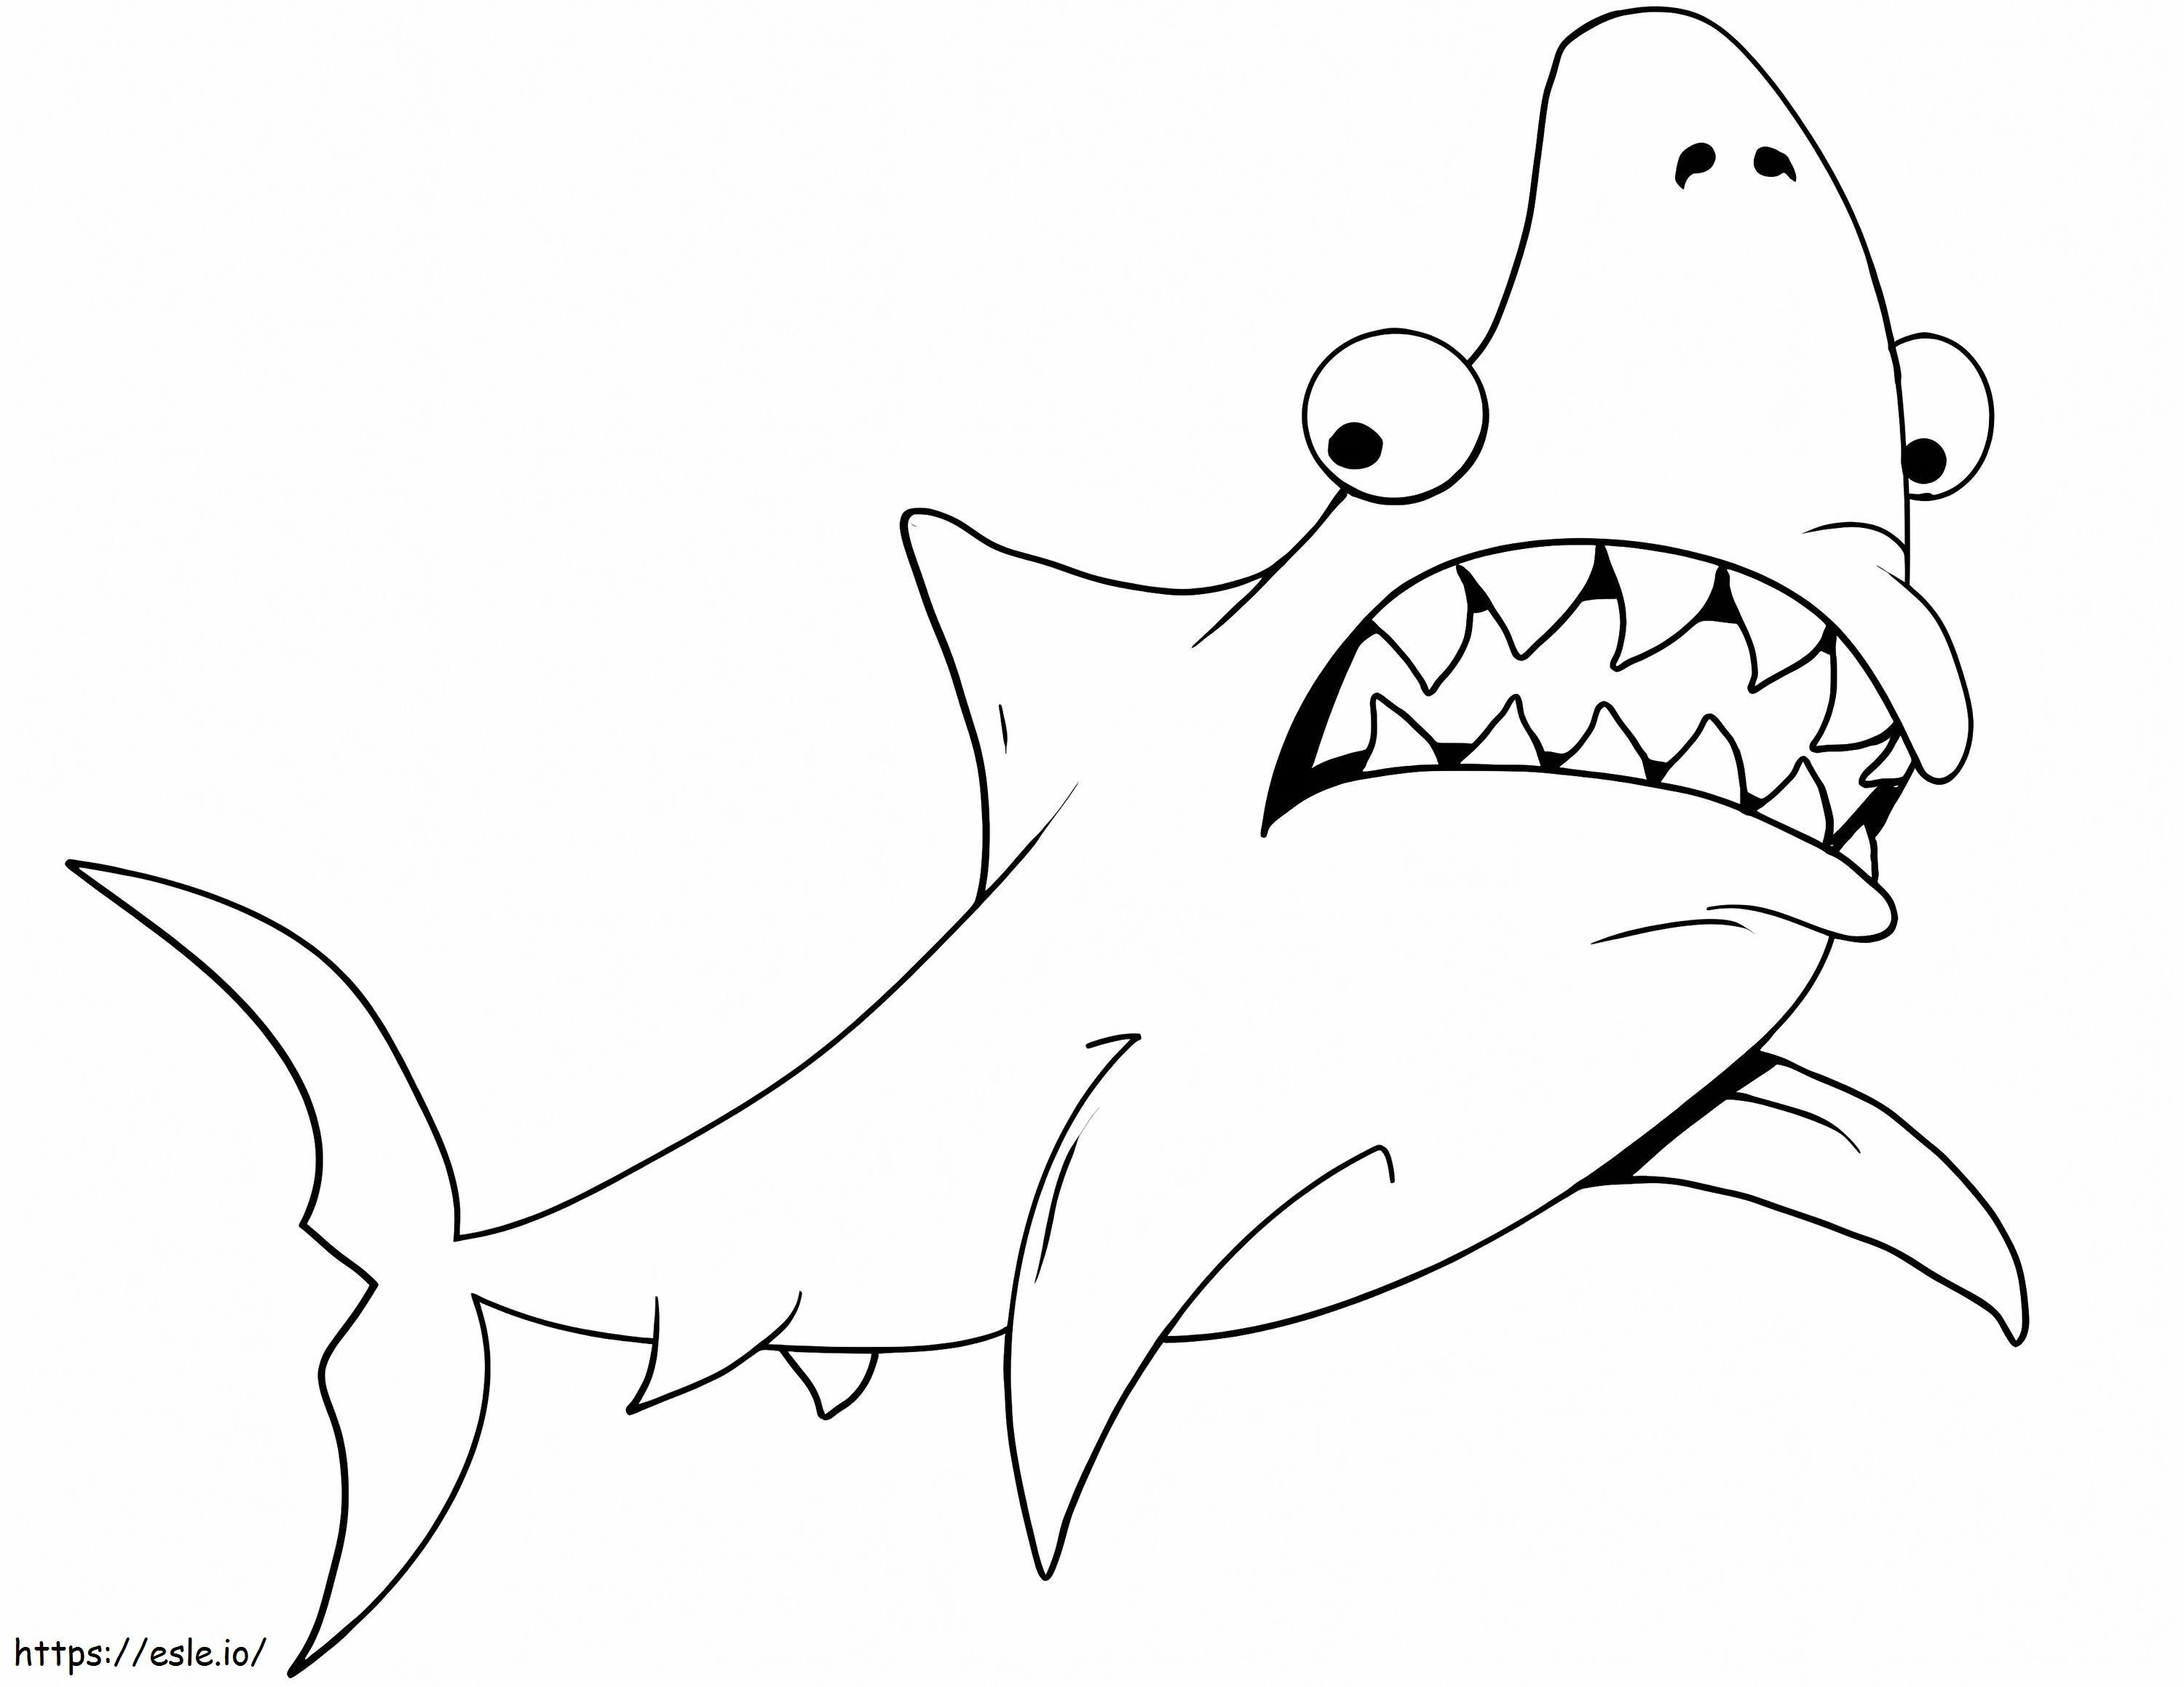 Cartoon Shark 1 coloring page